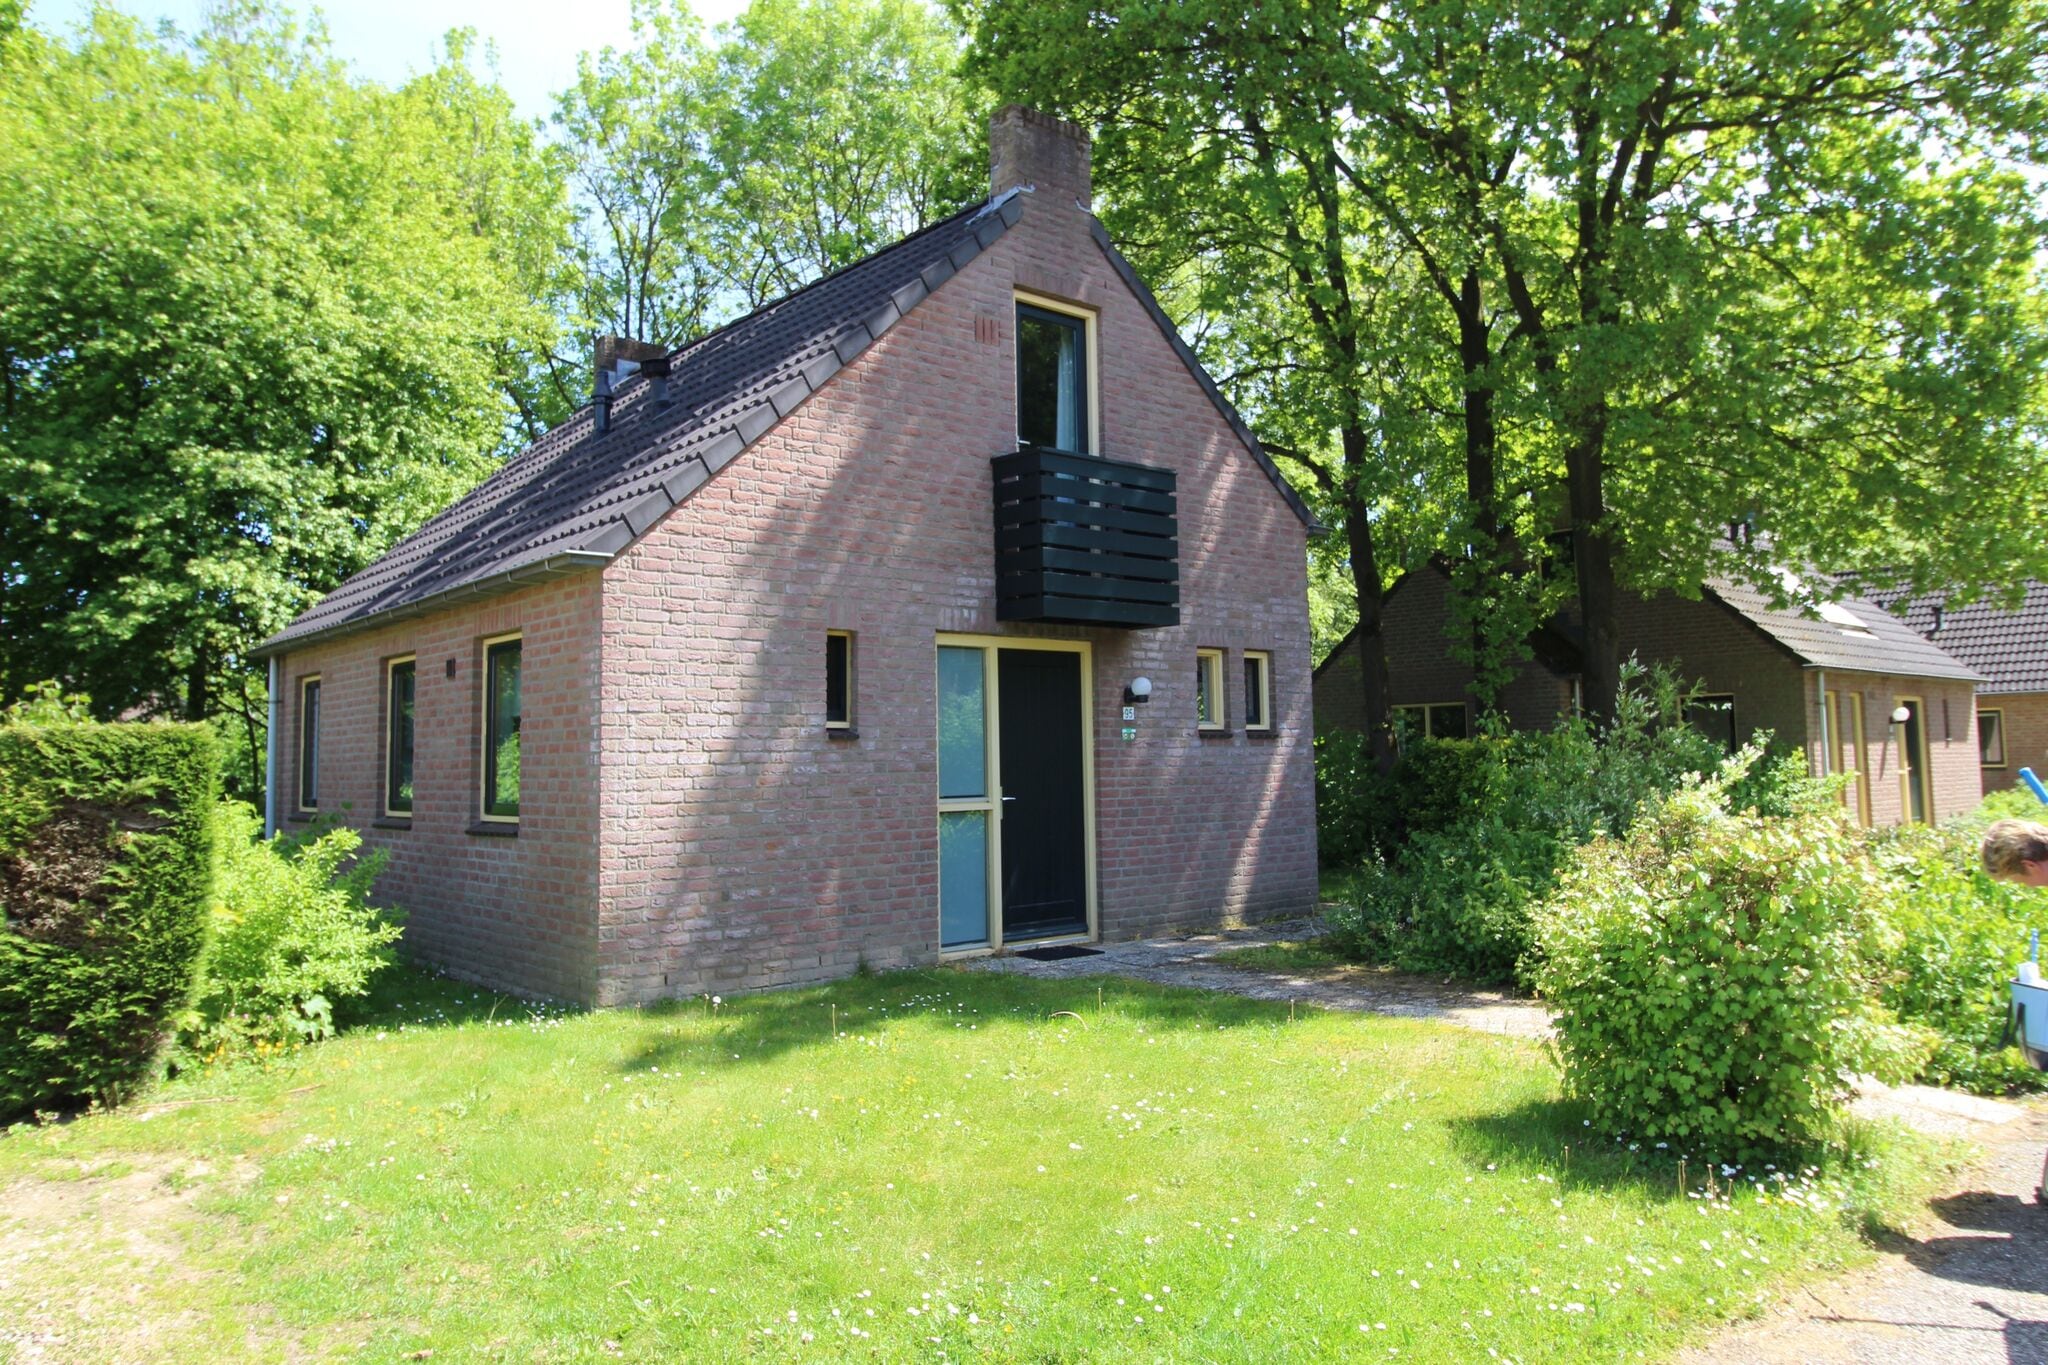 Detached holiday home near Nijmegen